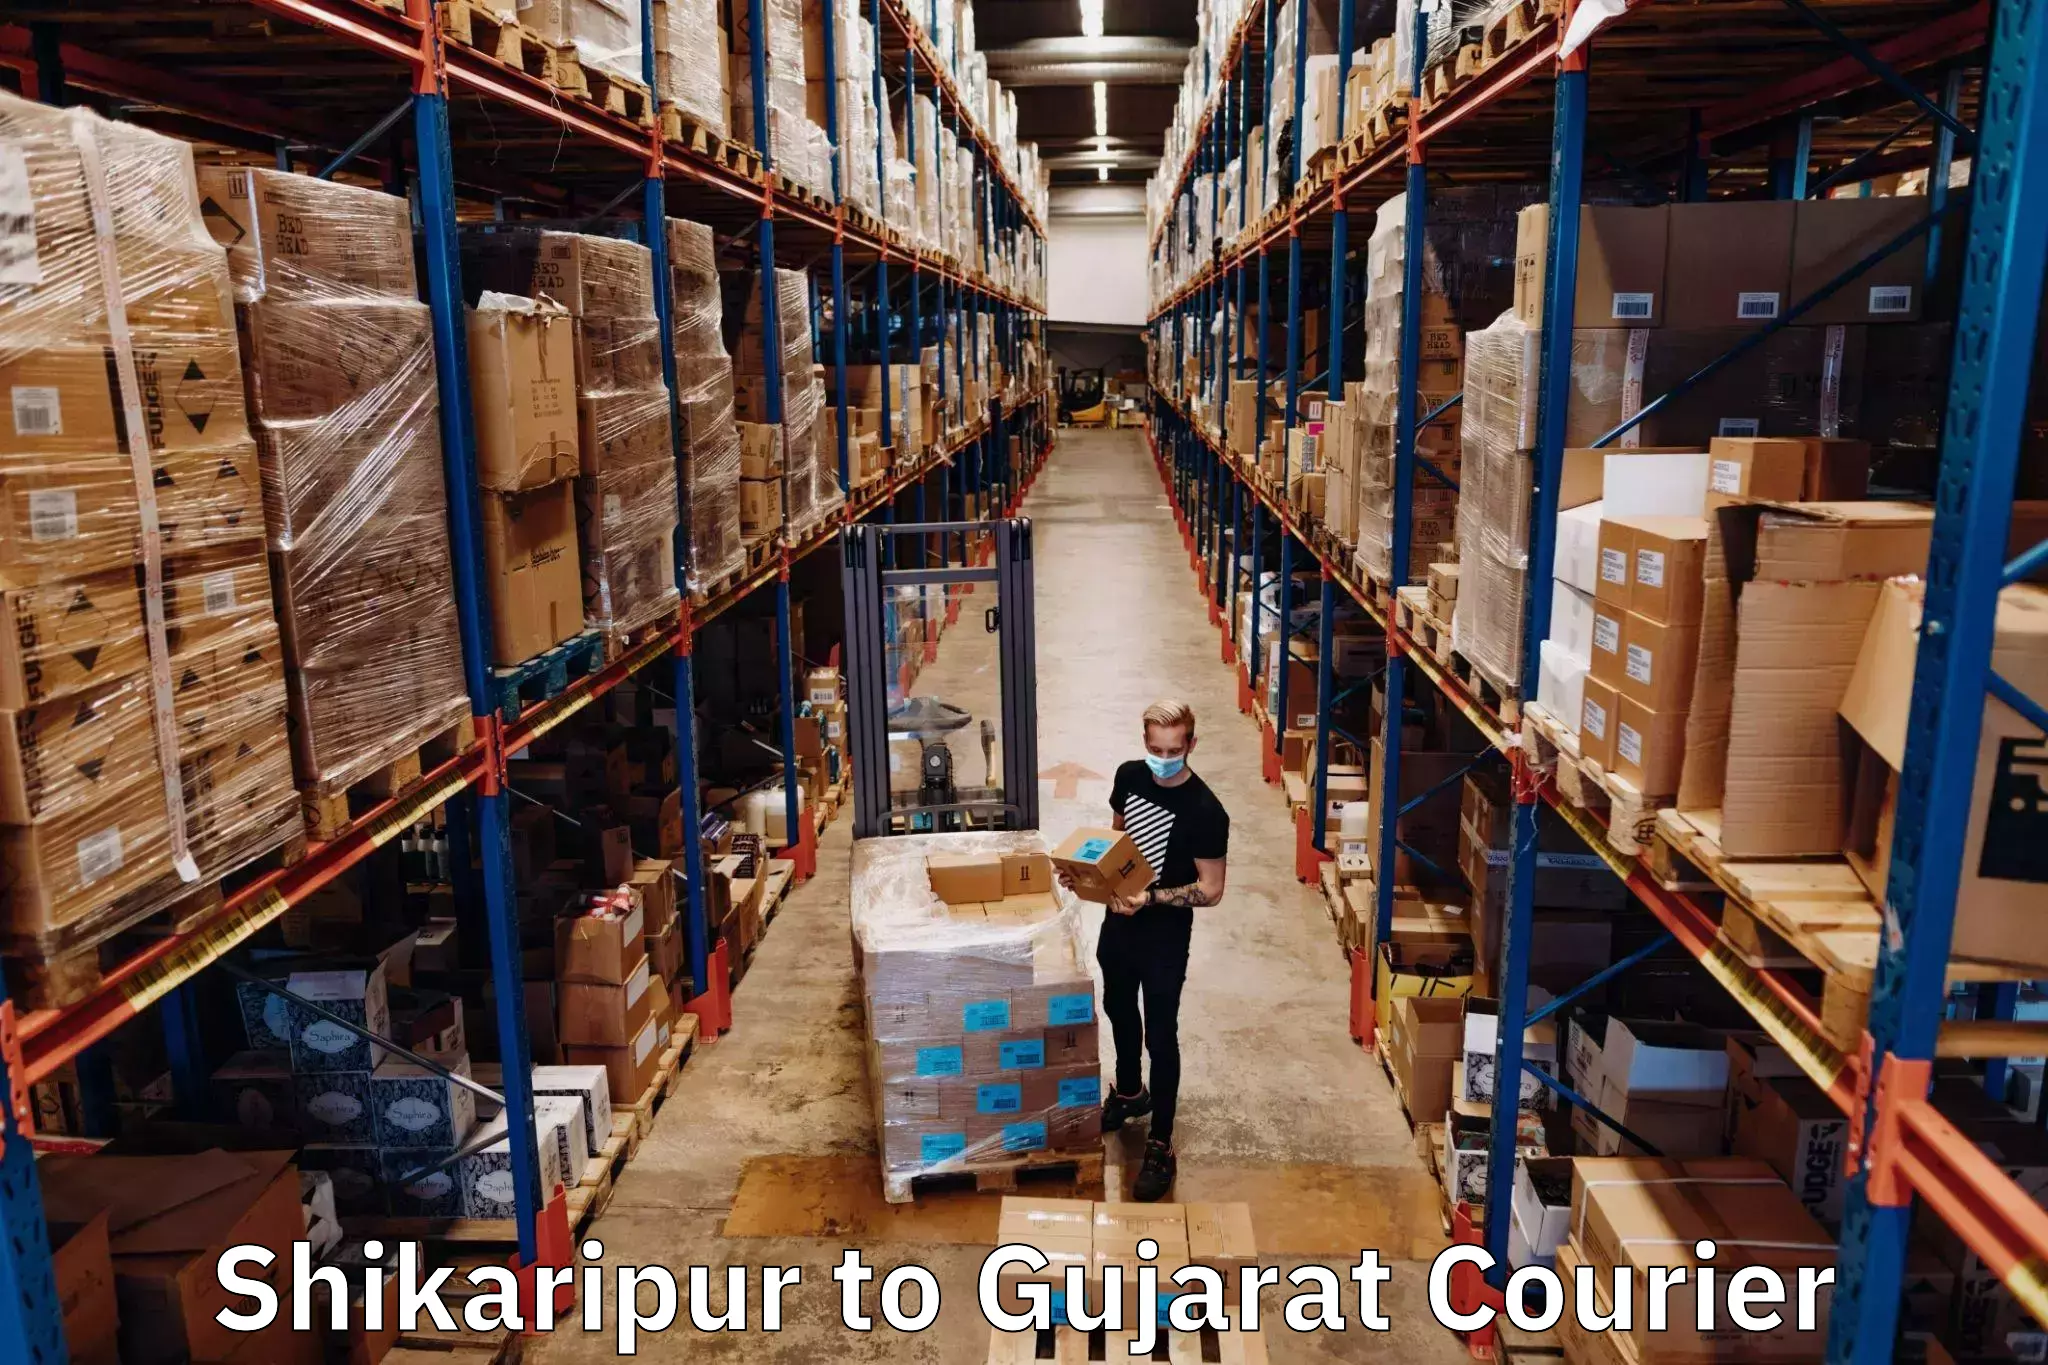 Global shipping networks Shikaripur to Jetpur